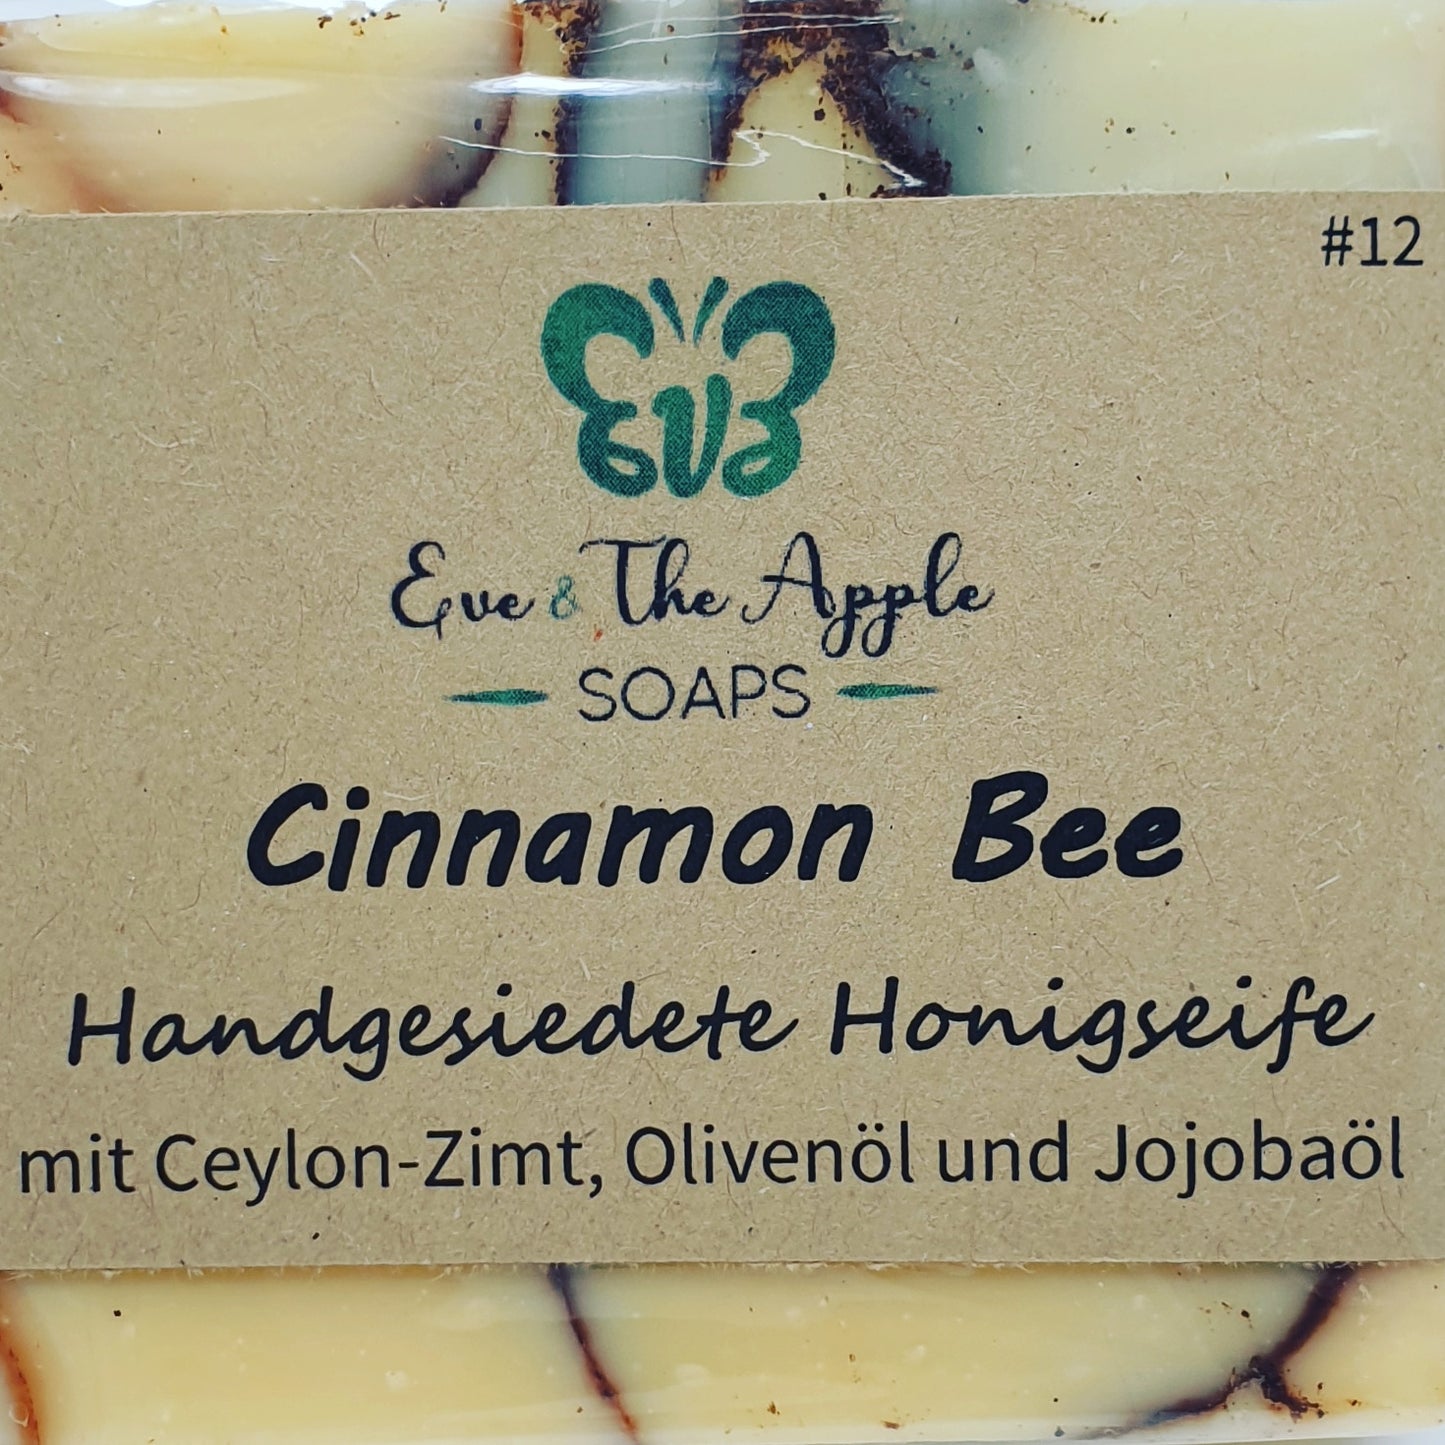 CINNAMON BEE #12 Honigseife mit Ceylon-Zimt, Olivenöl und Jojobaöl, 110 g